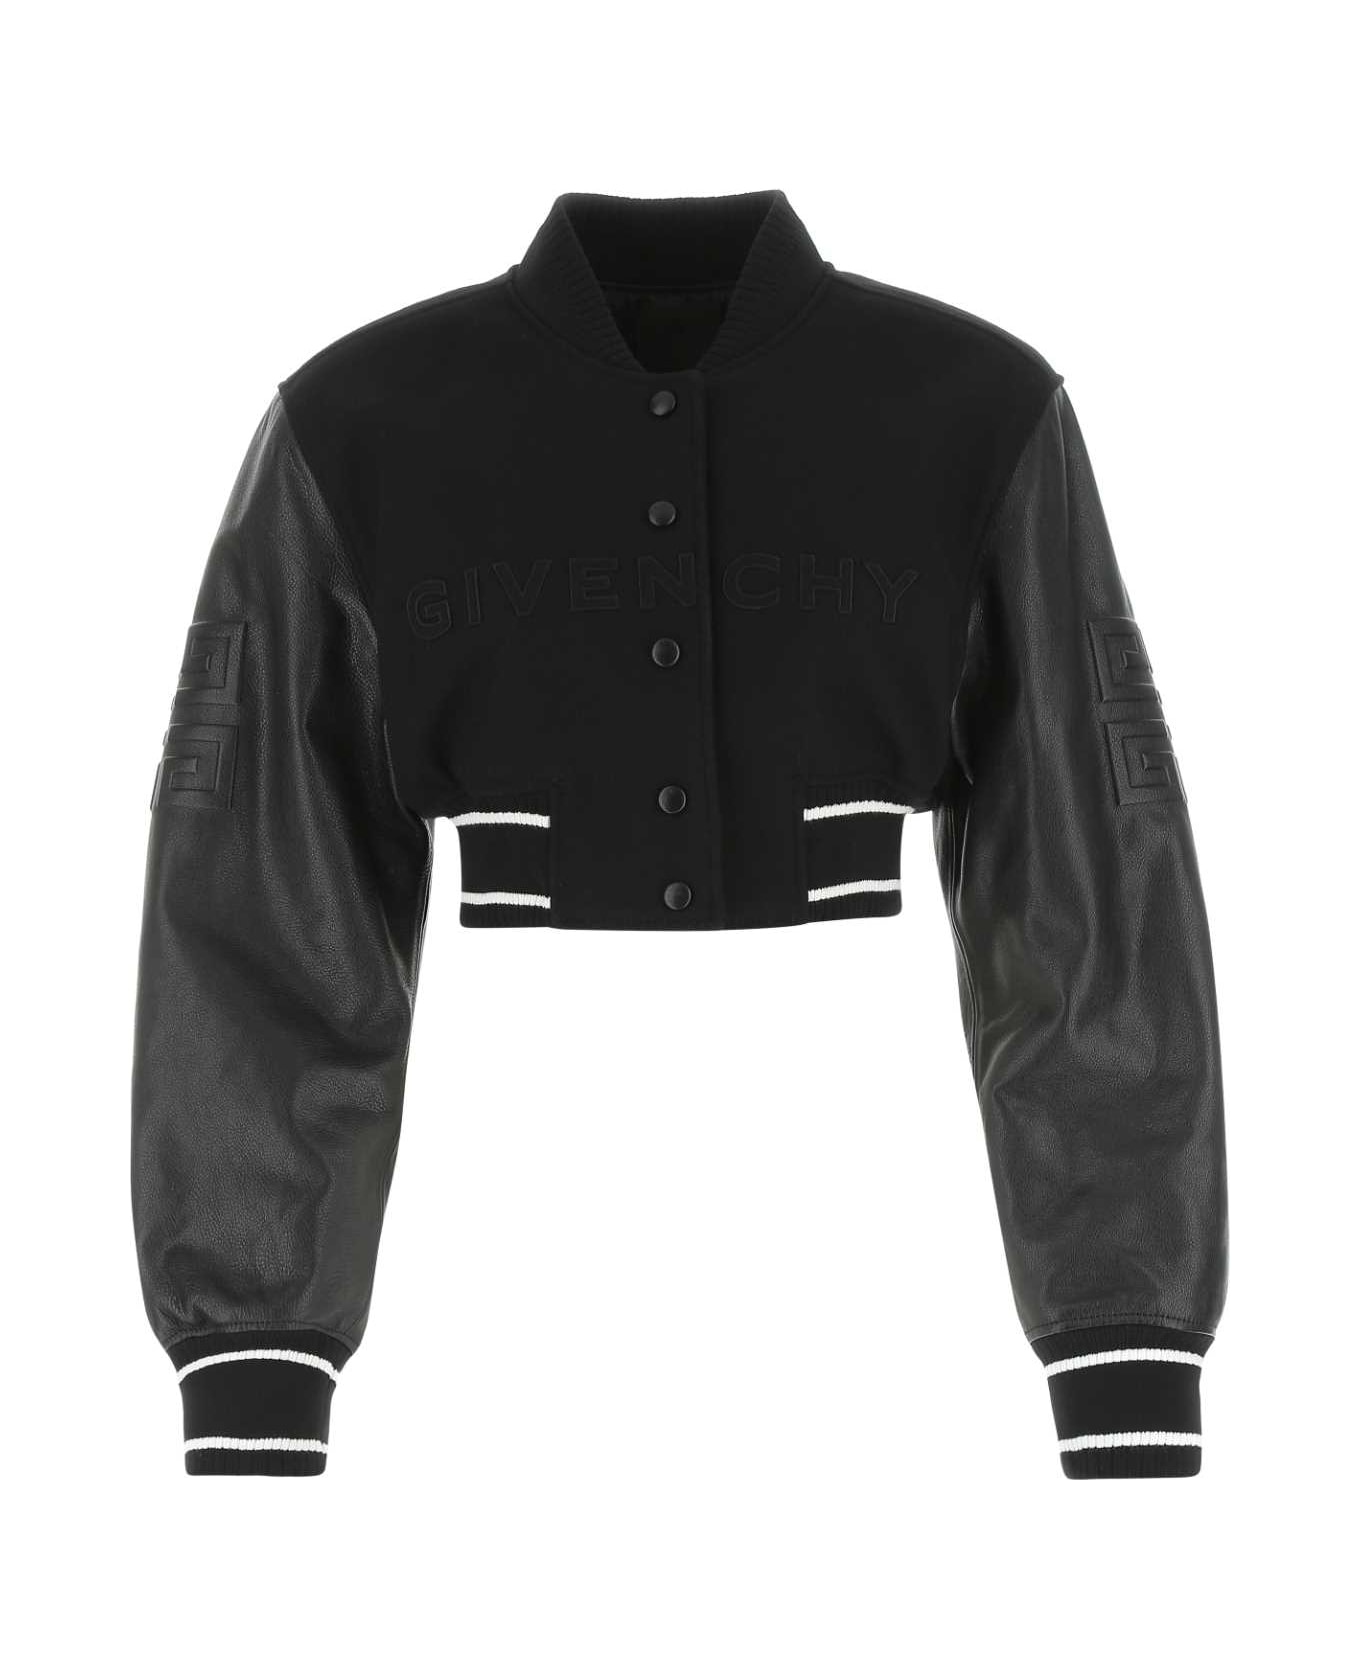 Givenchy Black Wool Blend Bomber Jacket - 004